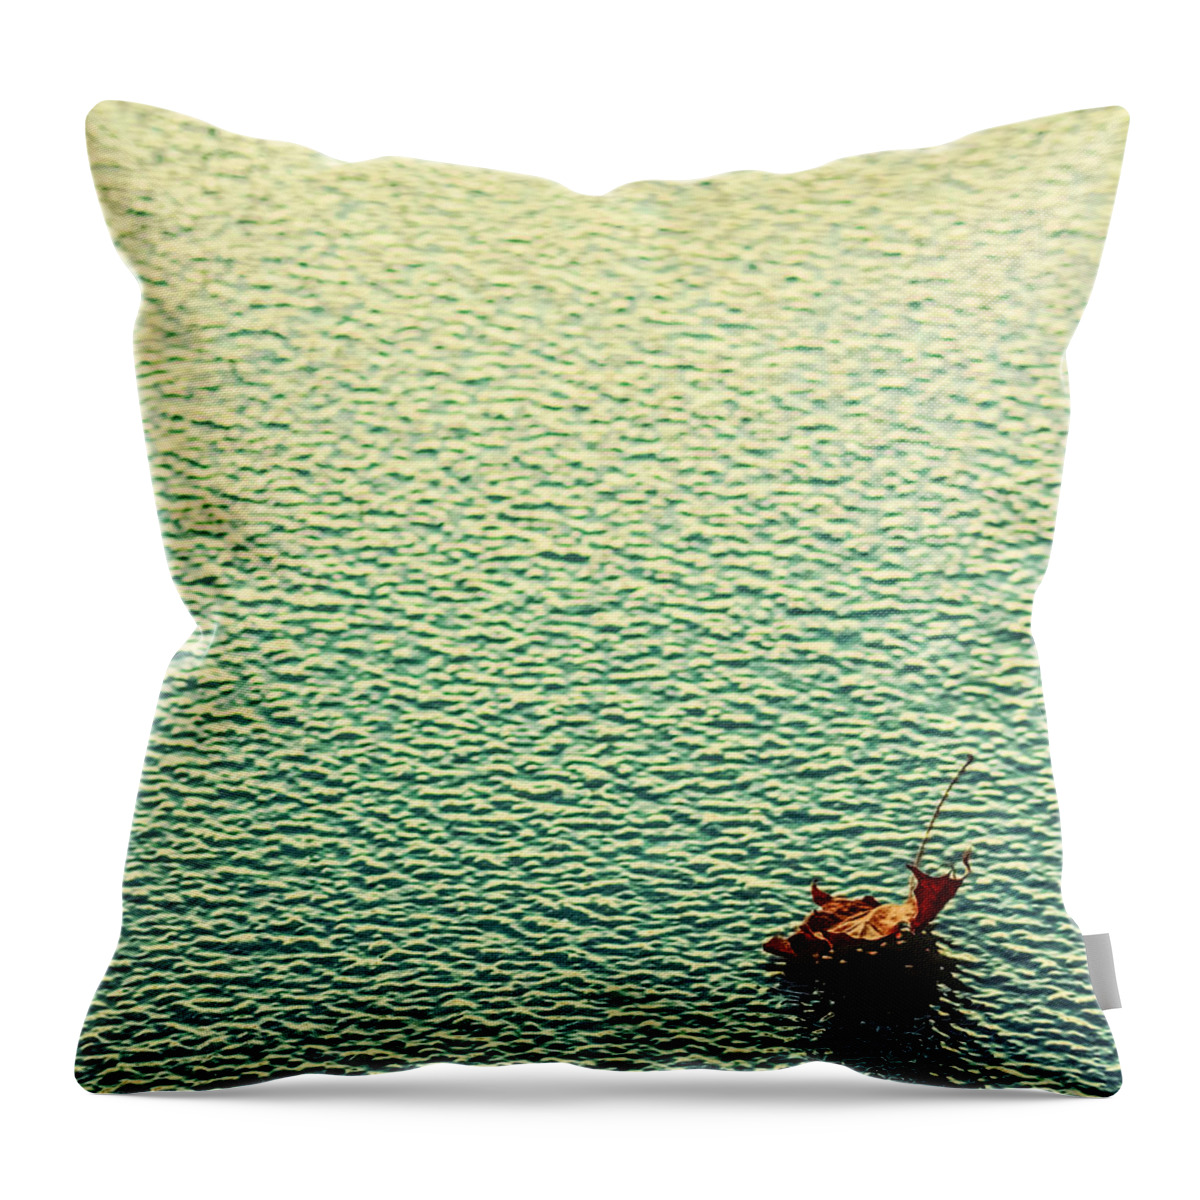 Ennui Throw Pillow featuring the photograph Adrift In A Sea Of Ennui by Karl Anderson